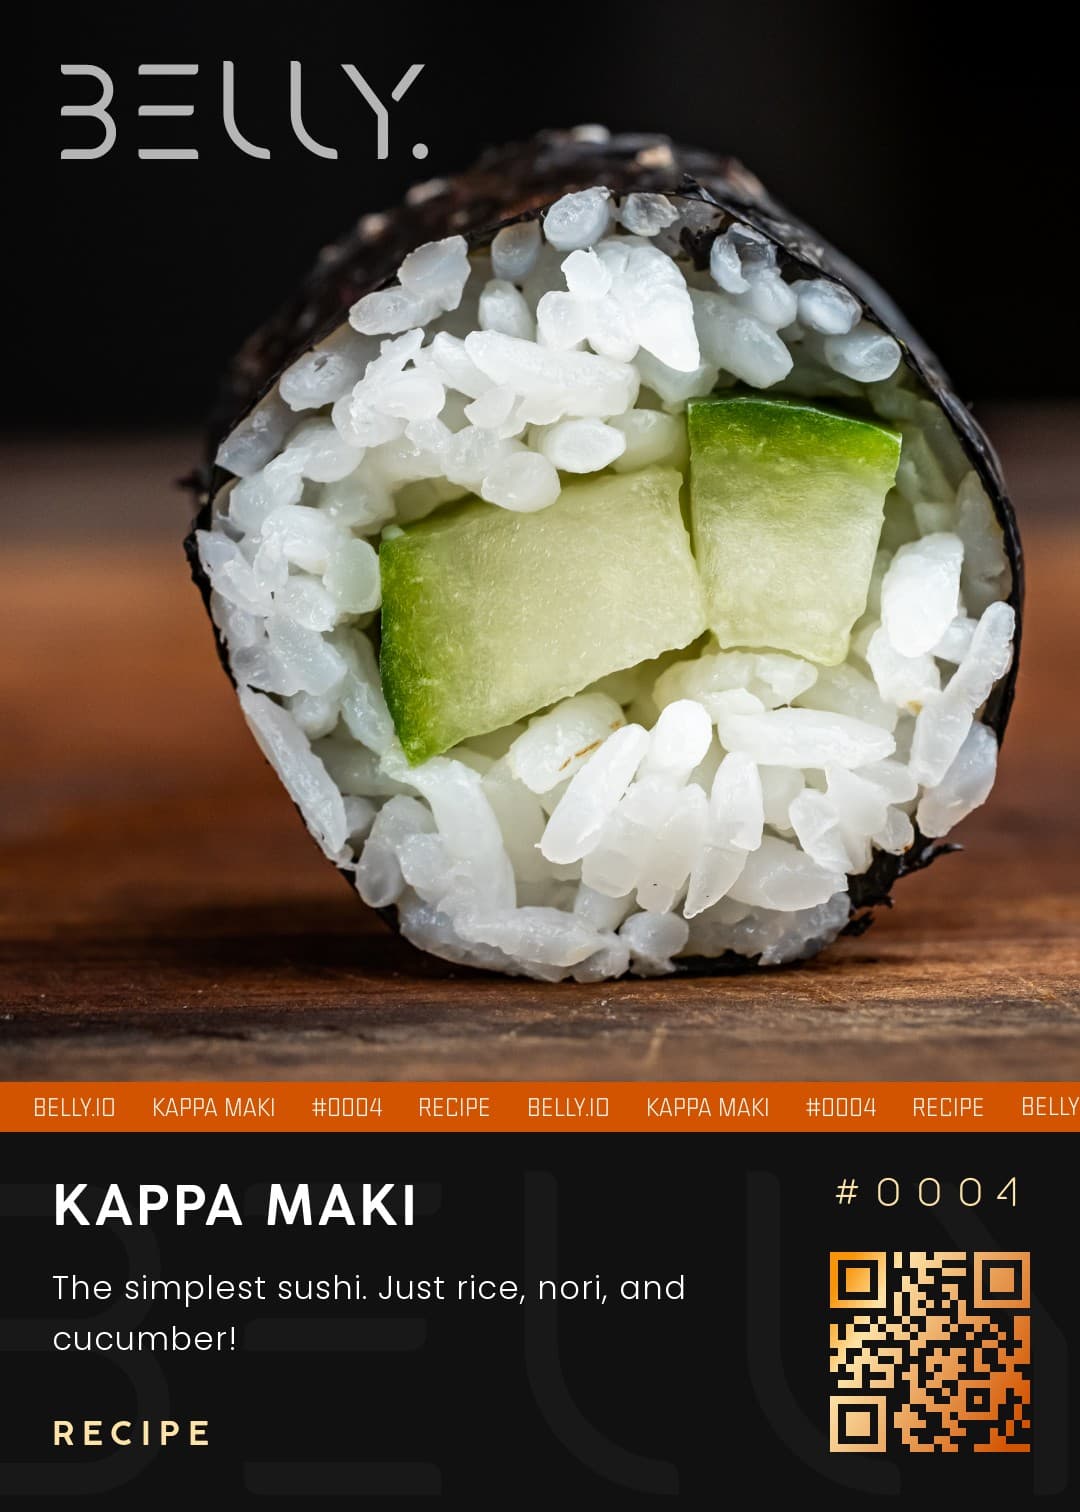 Kappa Maki - The simplest sushi. Just rice, nori, and cucumber!